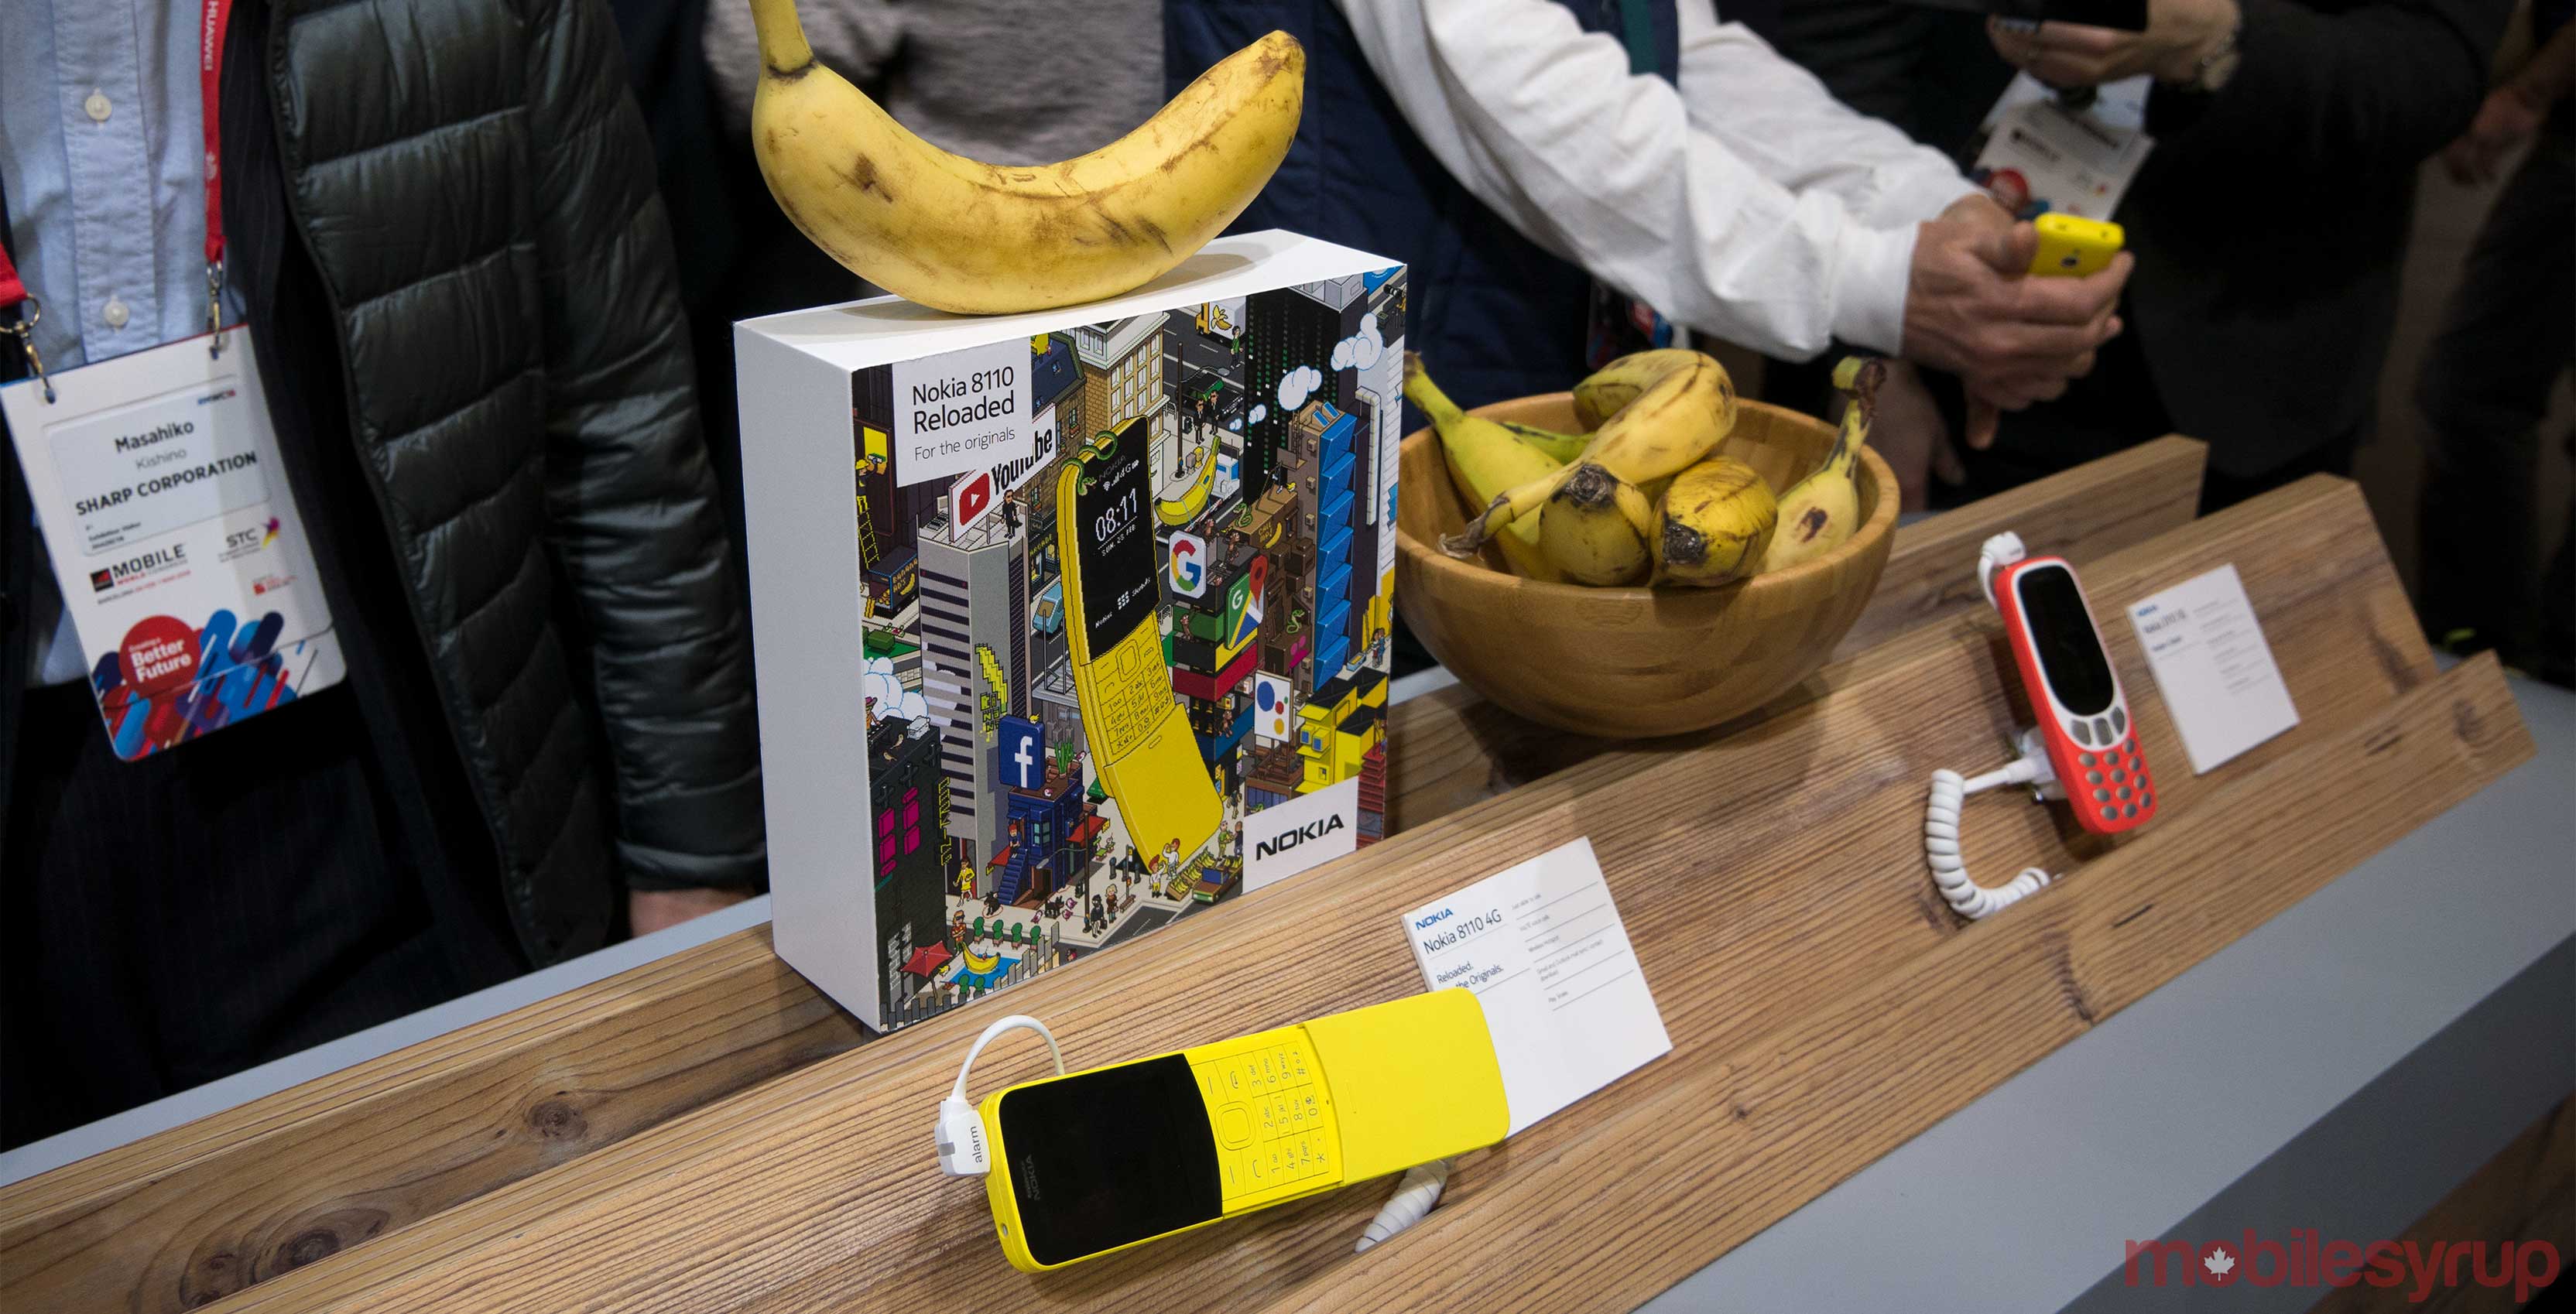 Nokia Banana phone